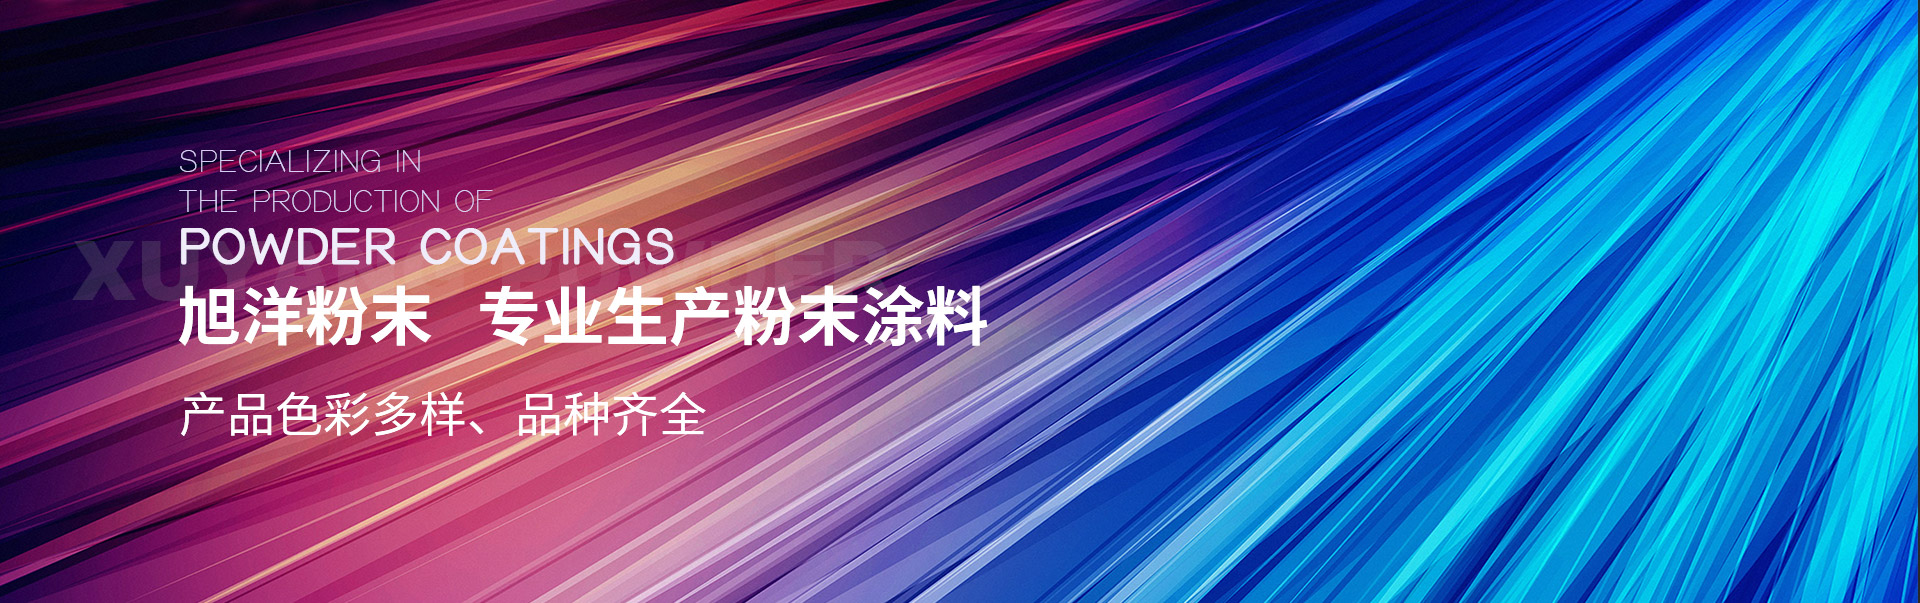 PC内页-中文版服务范围banner